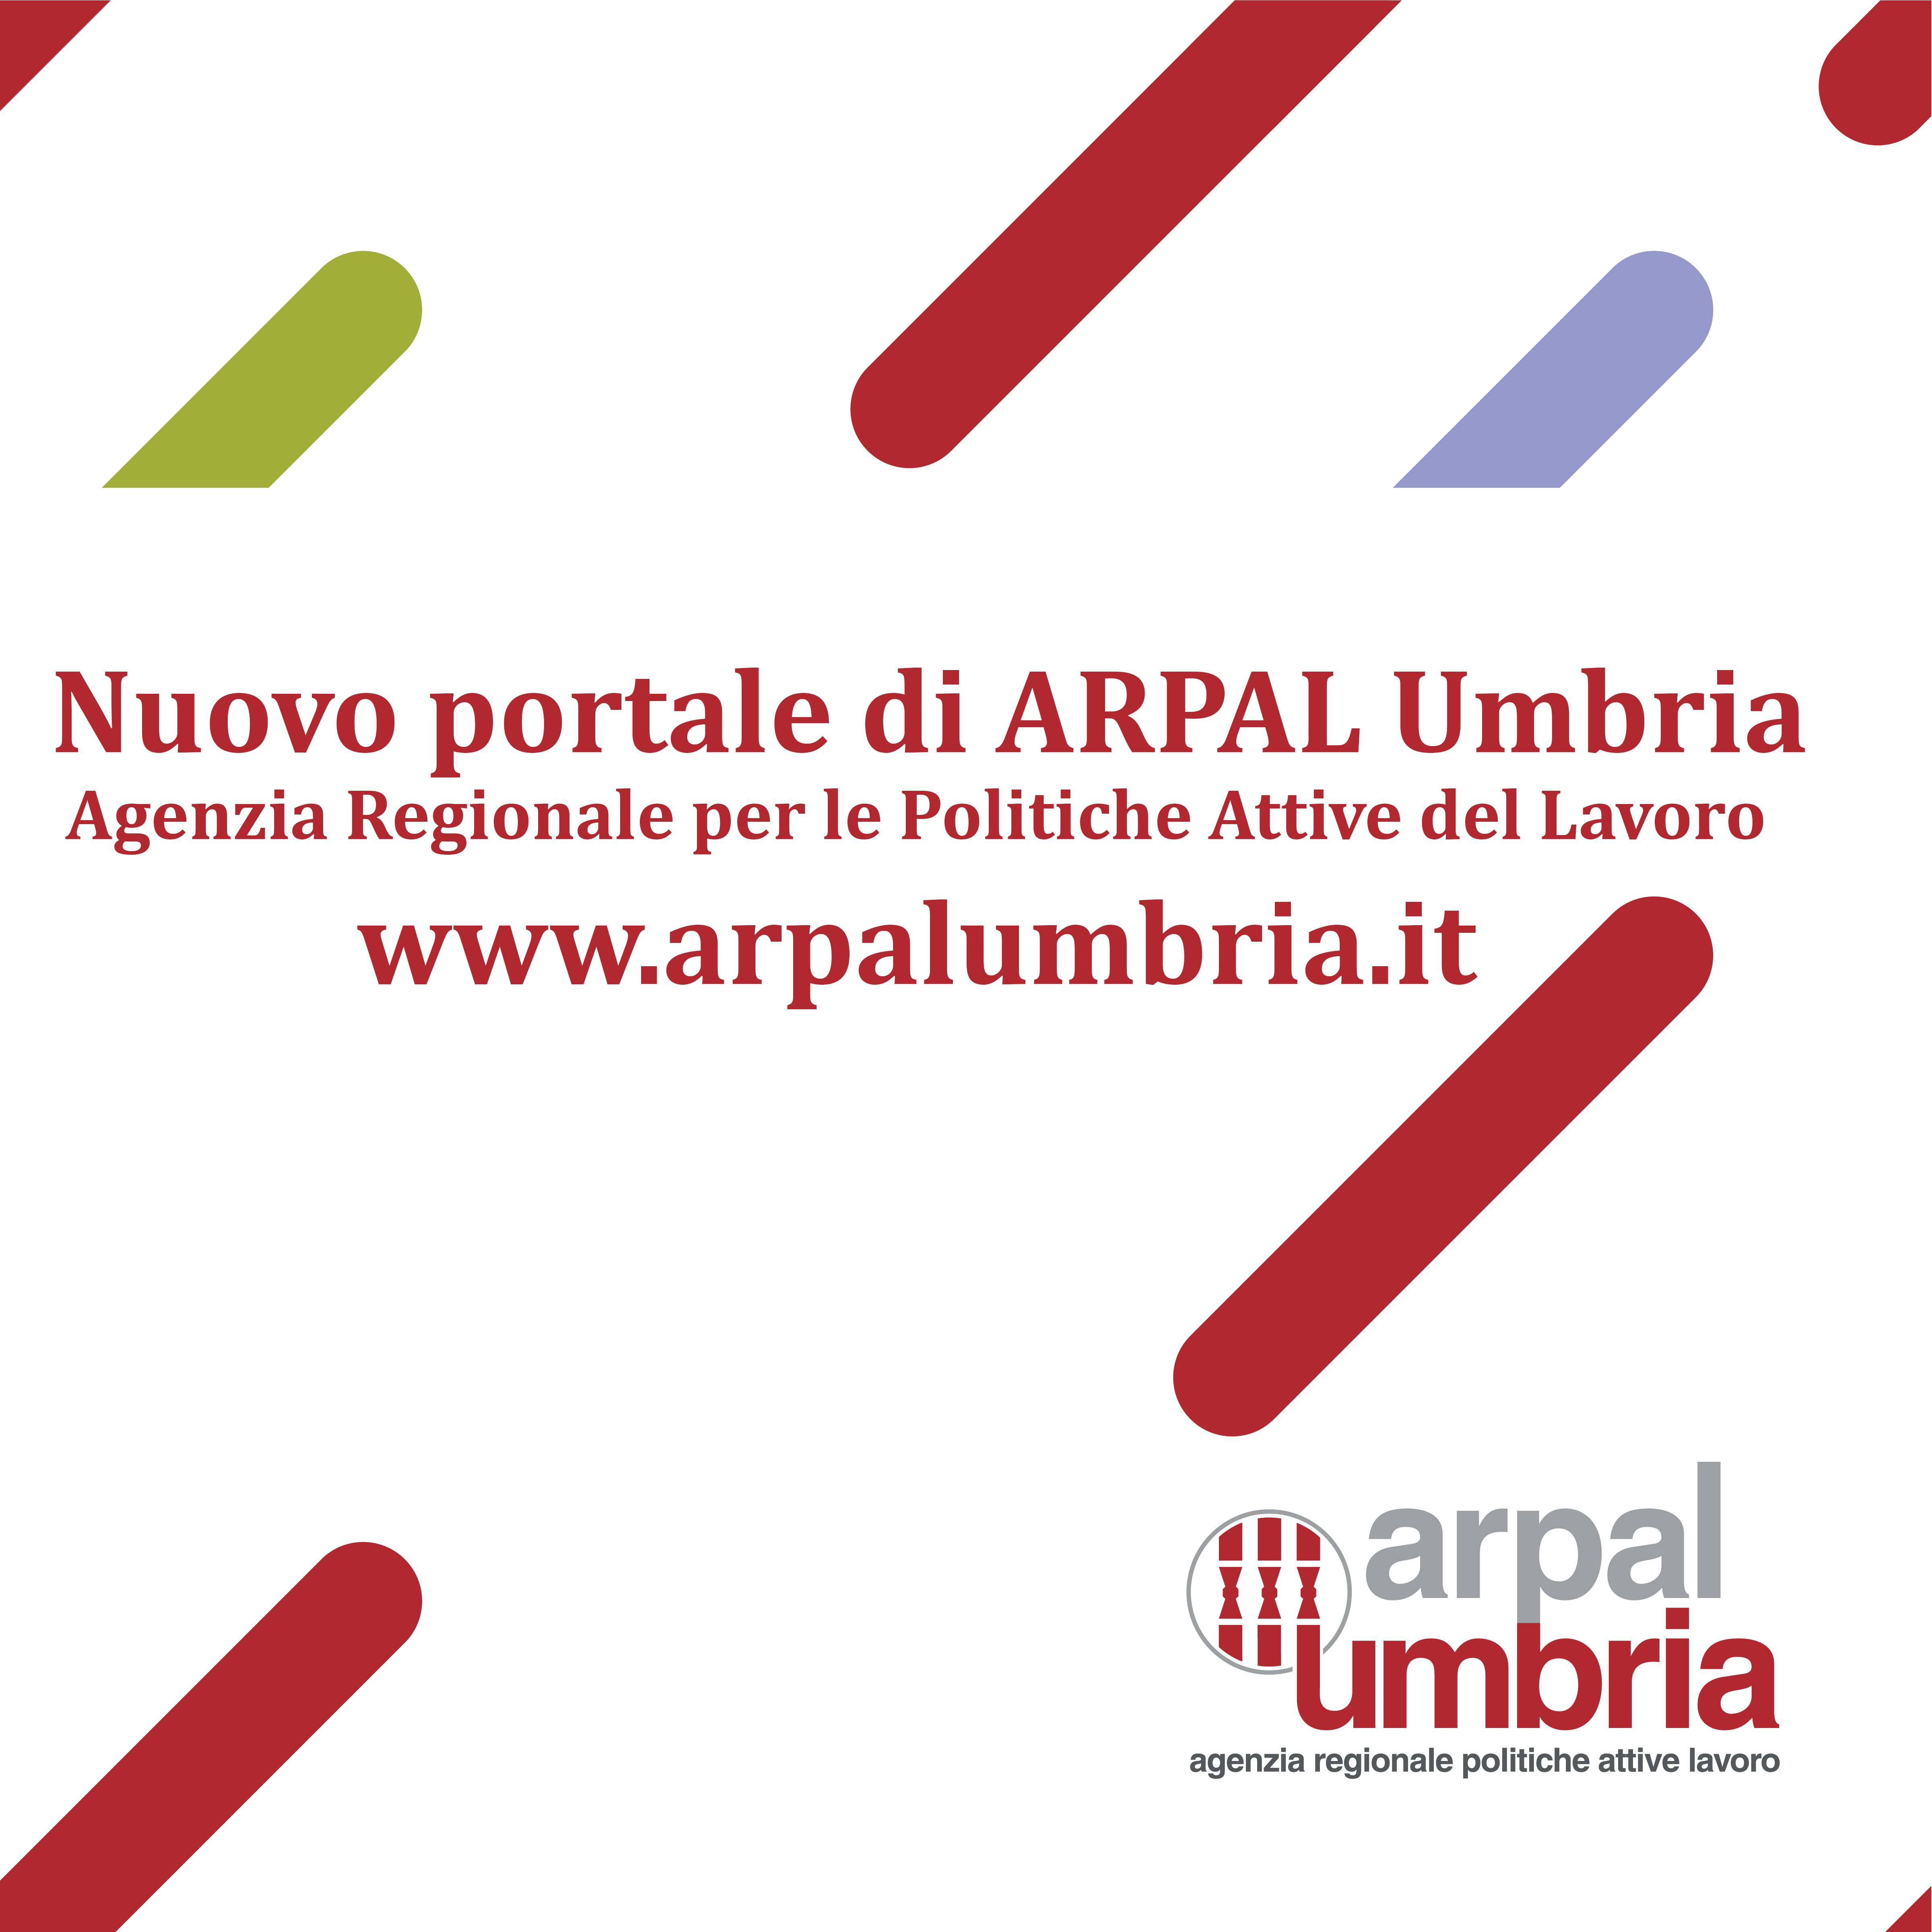 On line il nuovo sito ARPAL